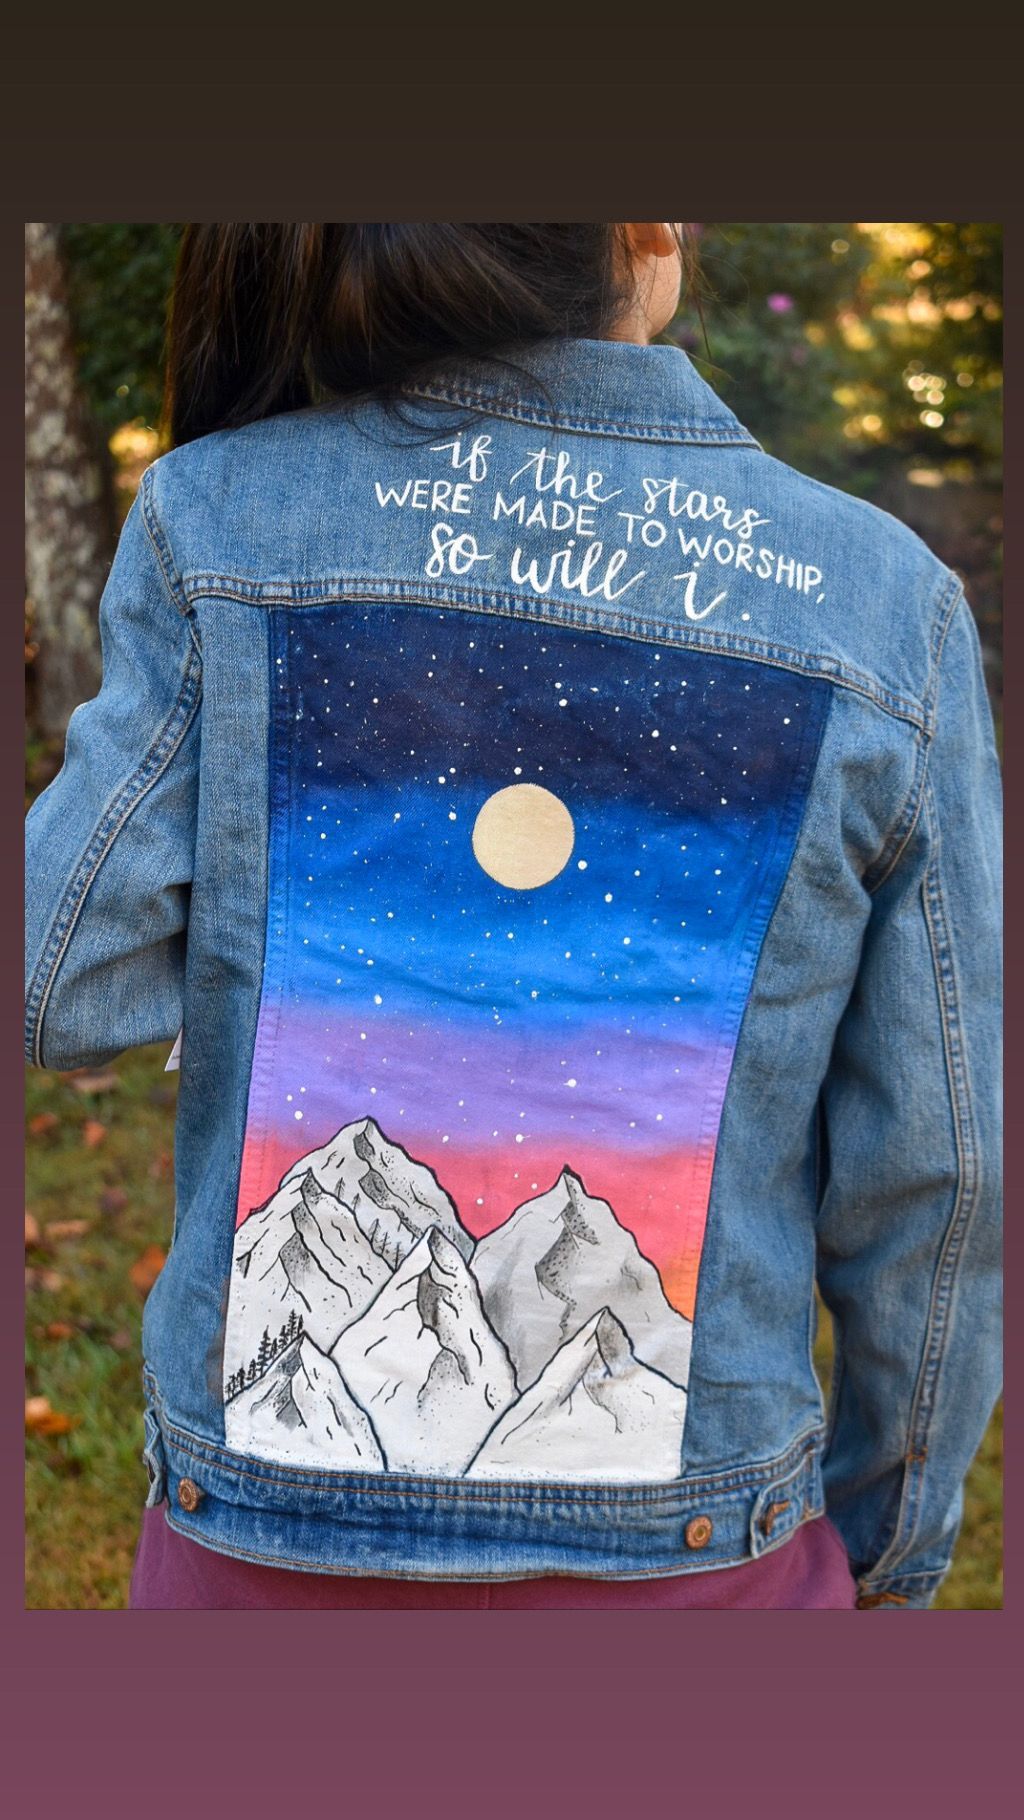 Hand Painted Denim Jacket with Landscape -   19 DIY Clothes Denim fun ideas